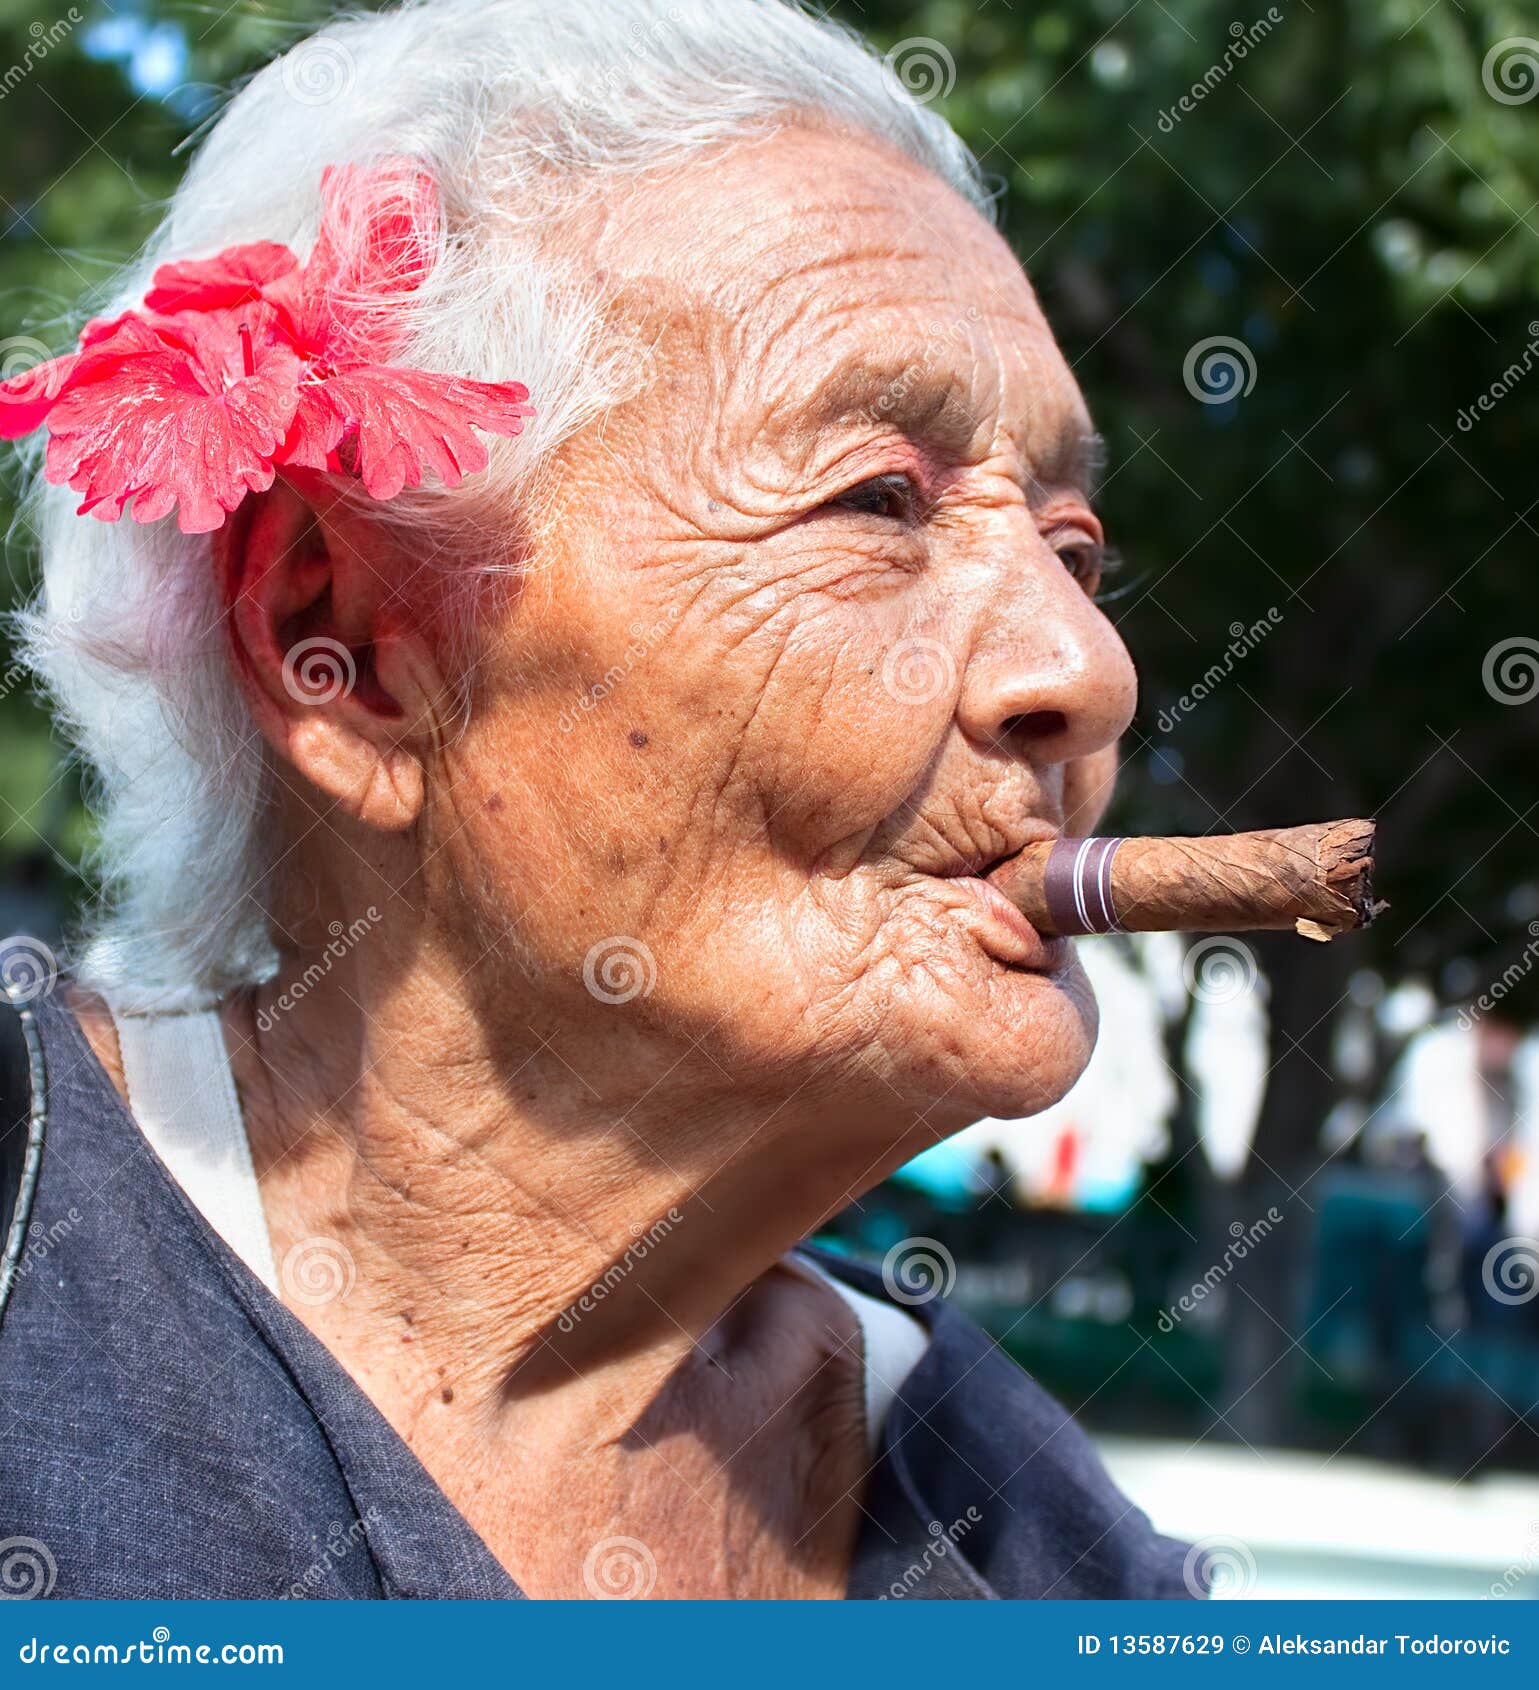 cassie lesko add old lady smoking cigar photo